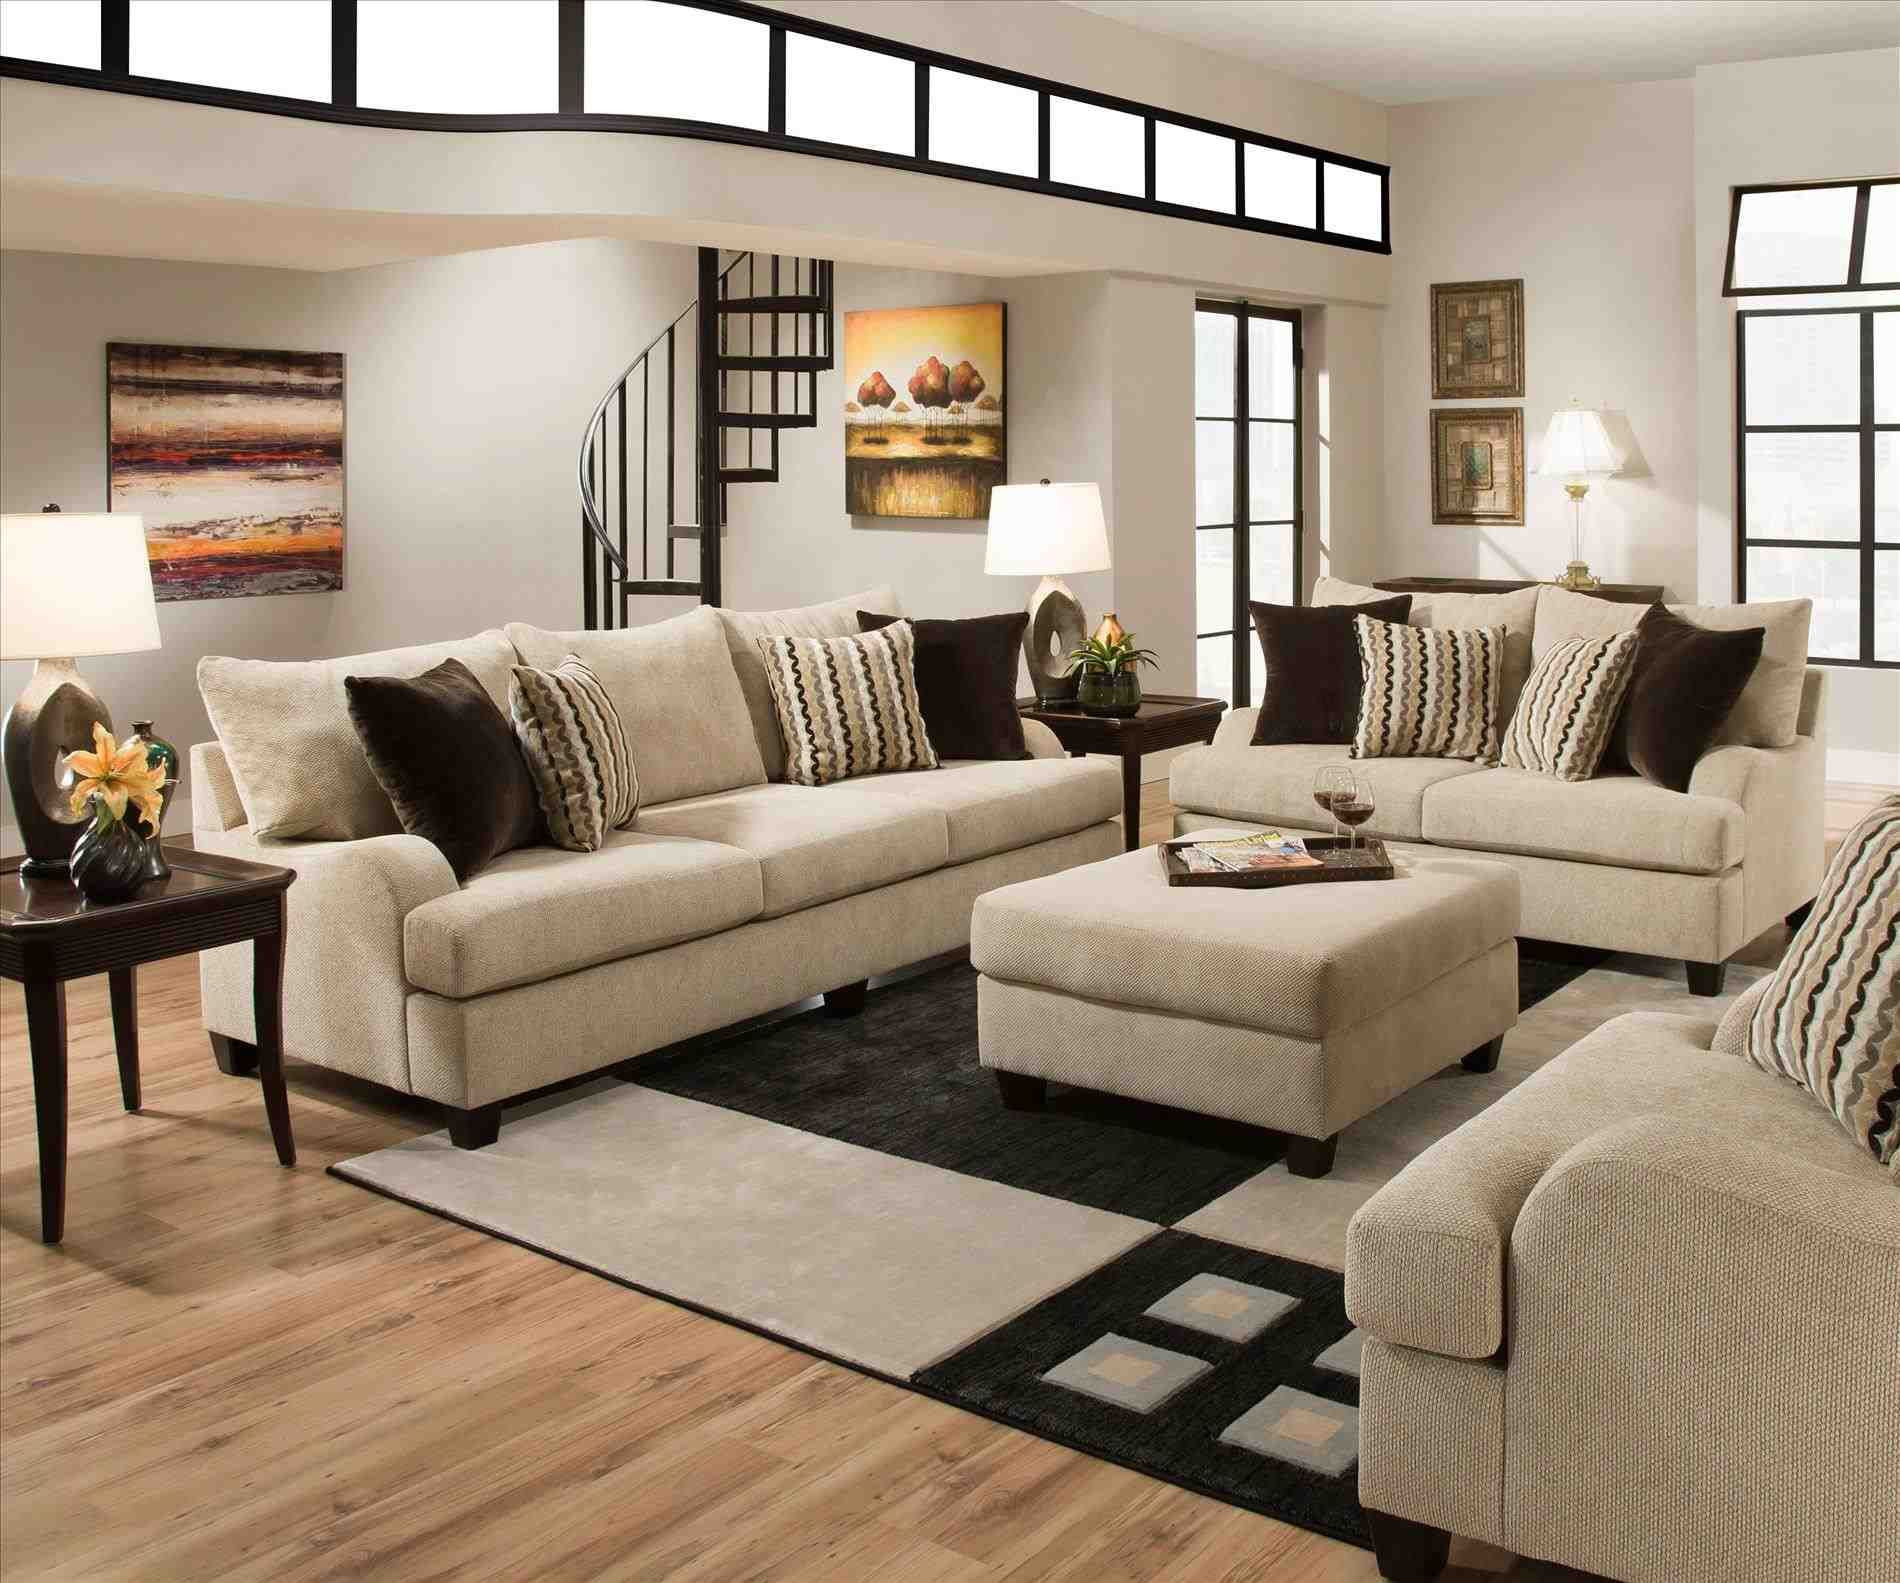 Nice Living Room Chairs
 Cheap Living Room Furniture Ideas nice living room